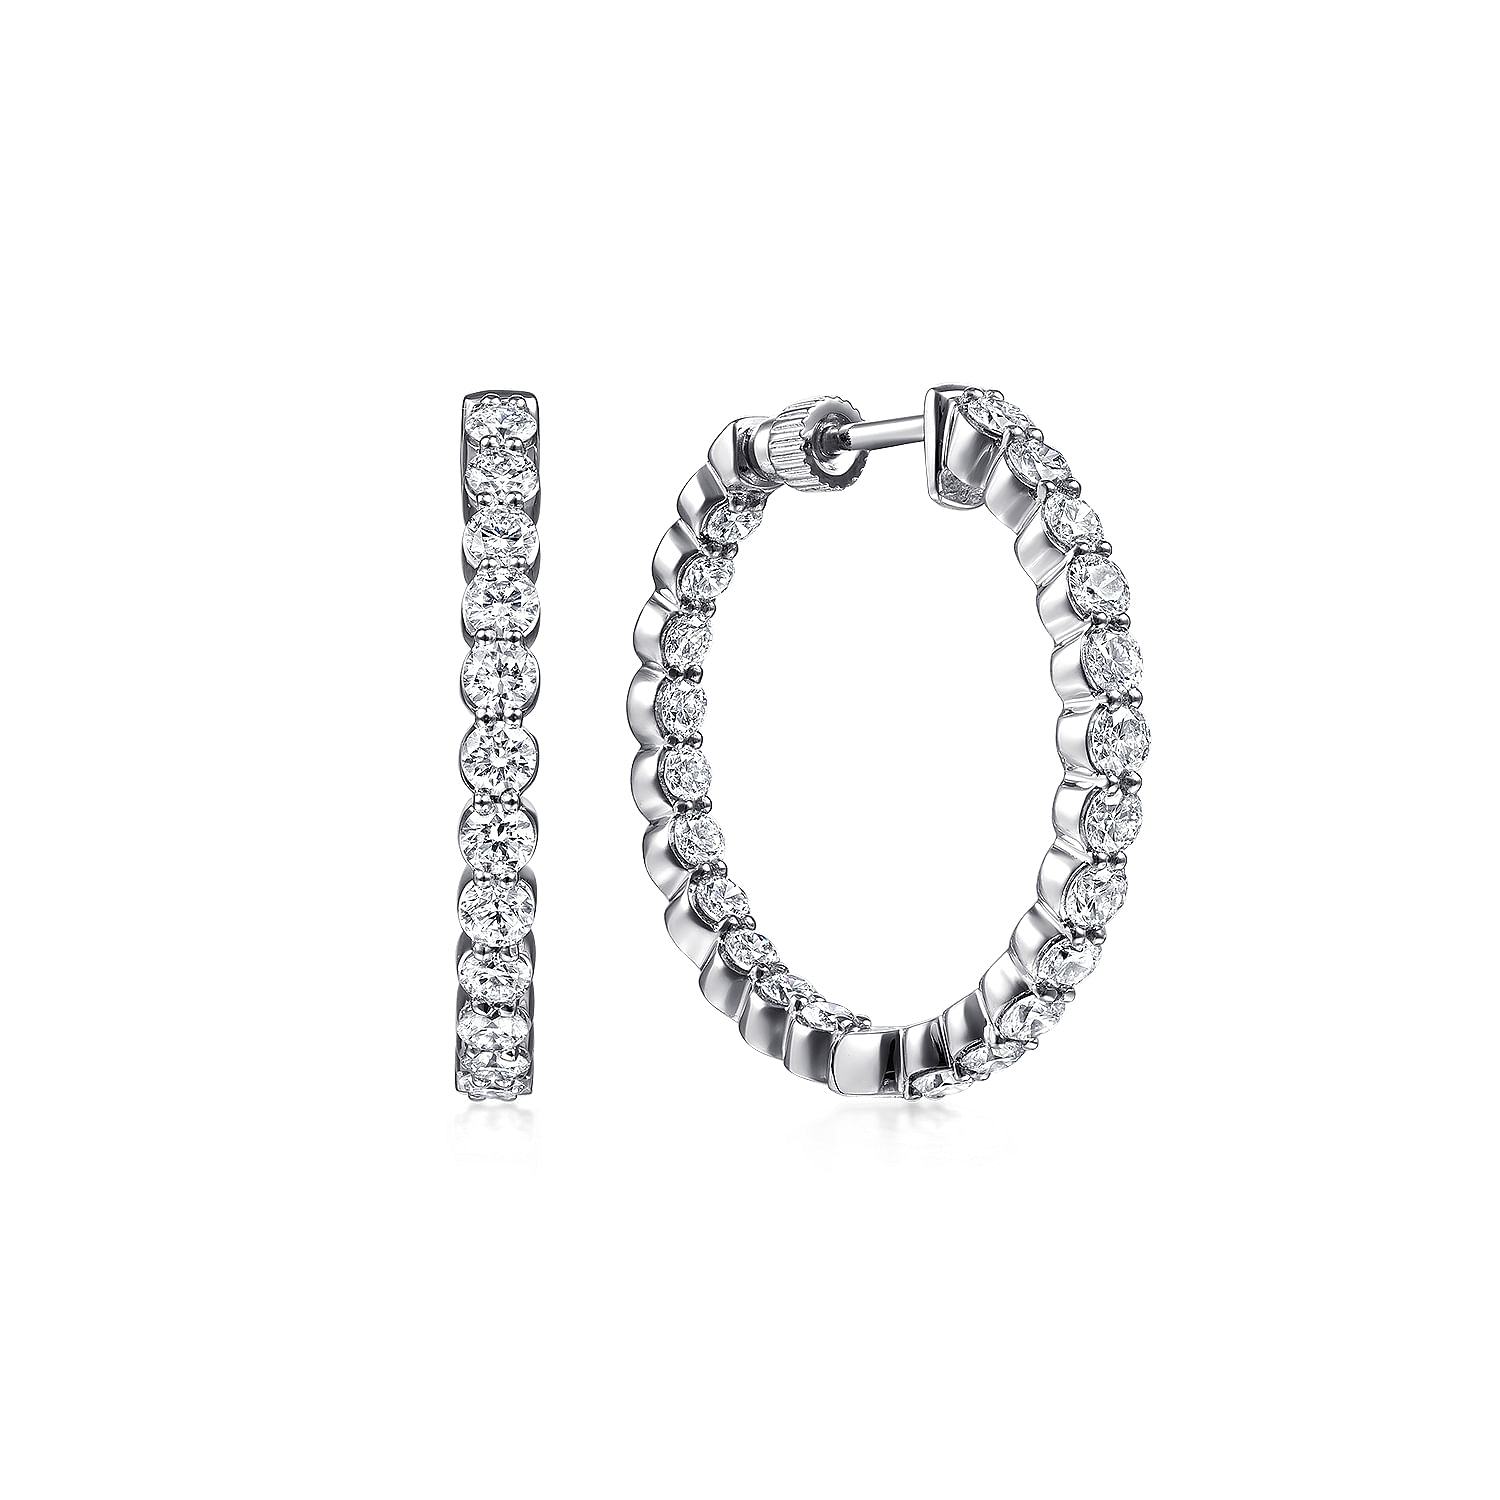 14K White Gold Prong Set 20mm Round Inside Out Diamond Hoop Earrings